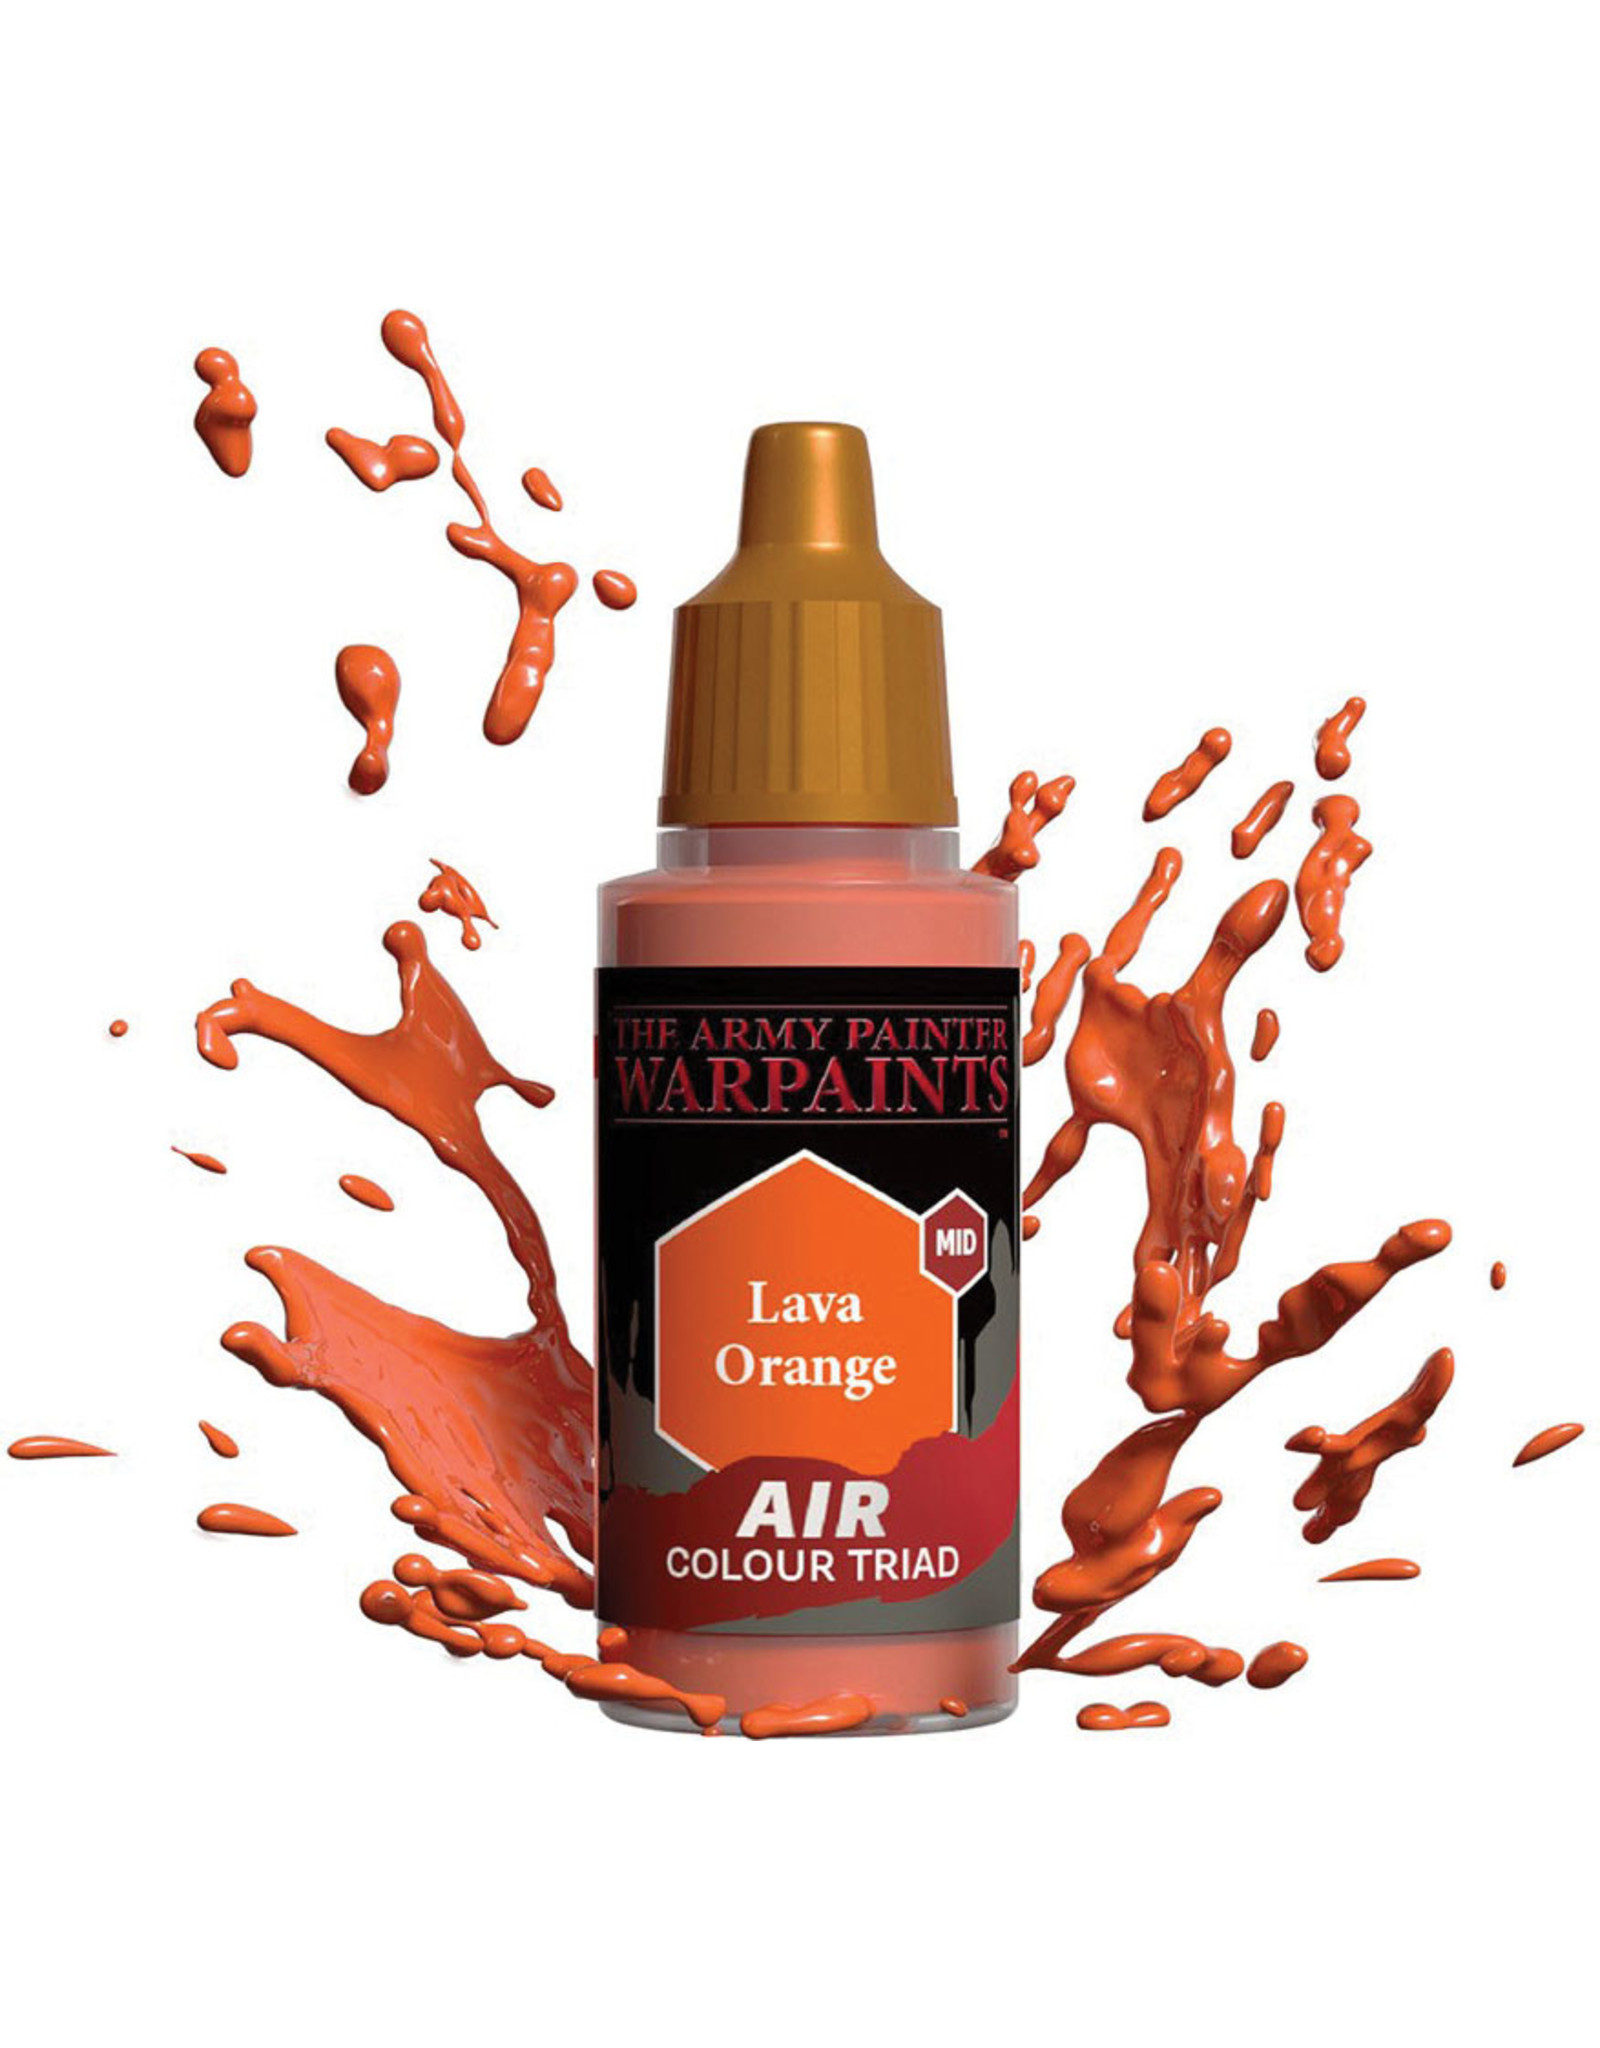 Army Painter Warpaint Air: Lava Orange, 18ml.